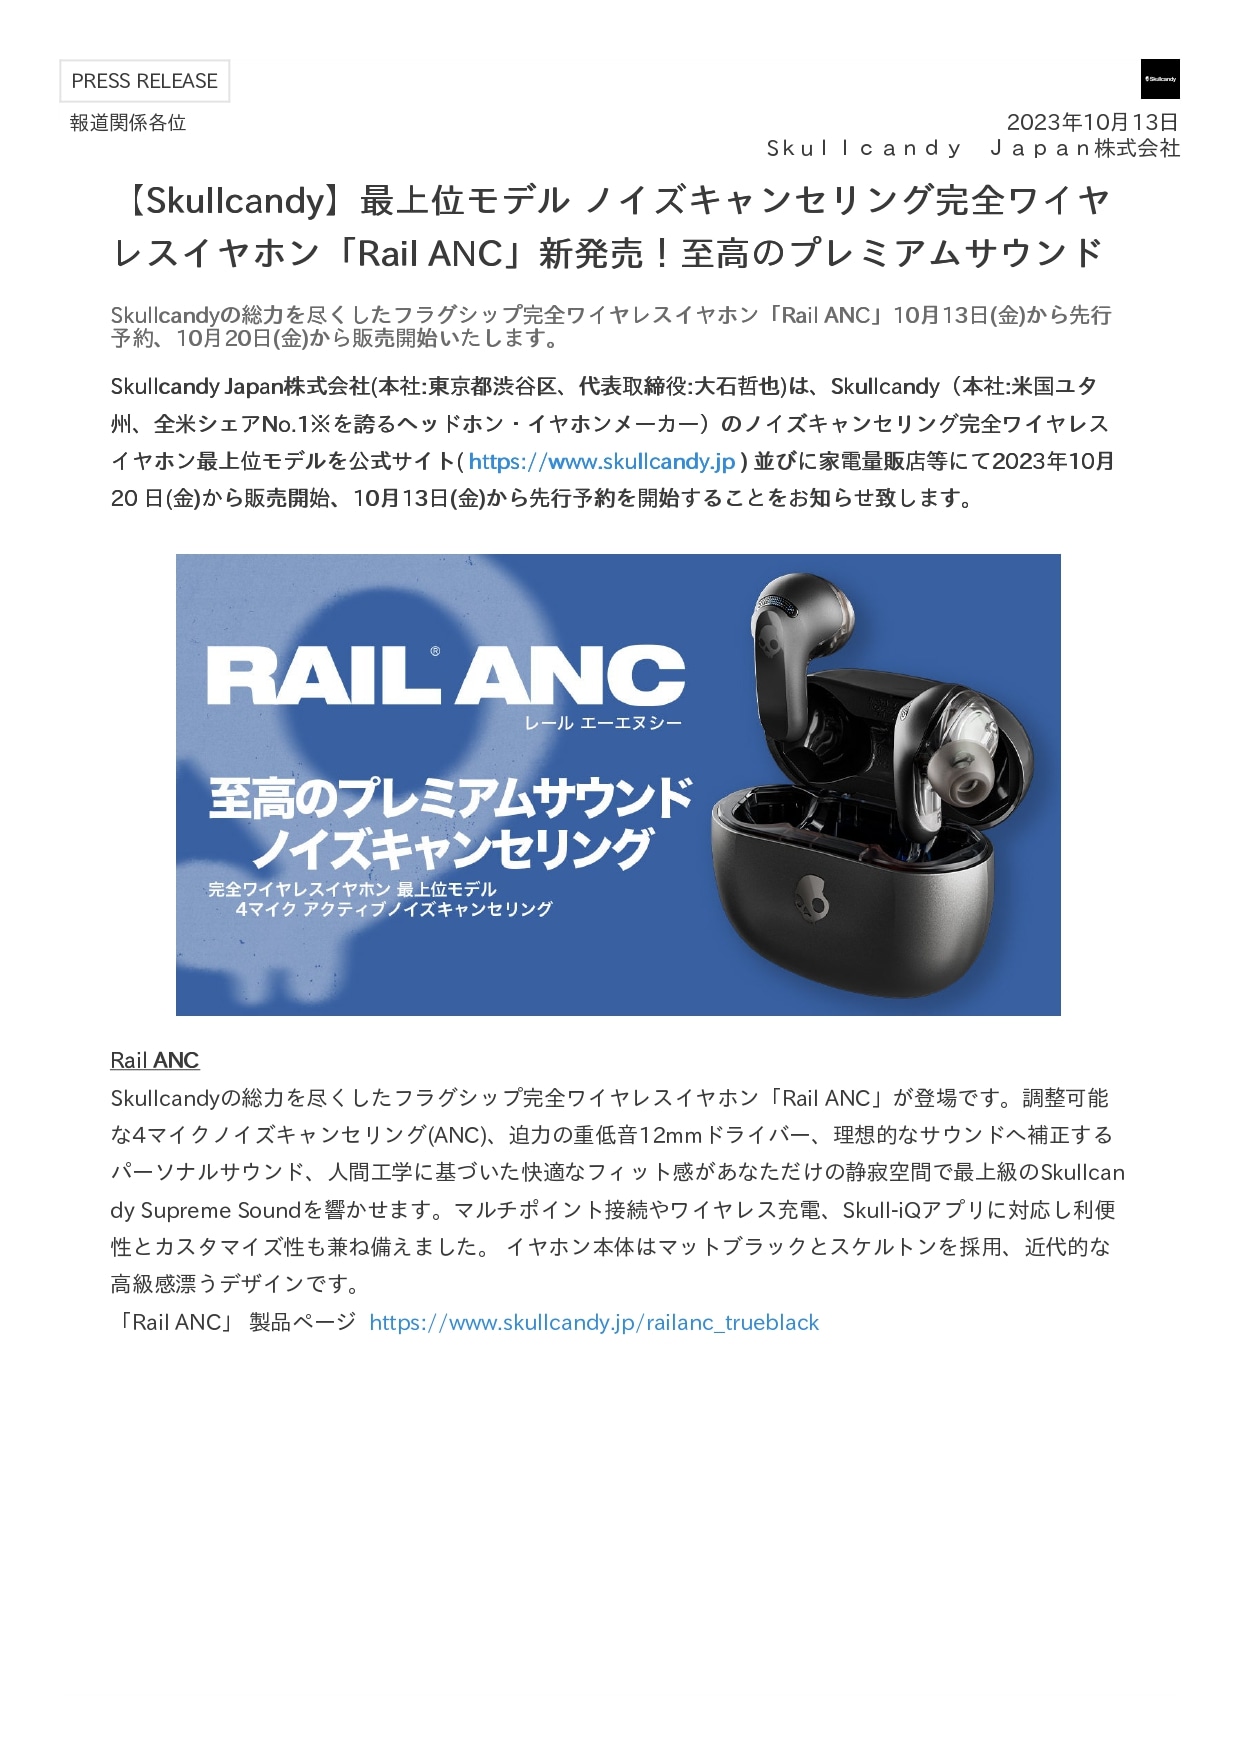 “Rail